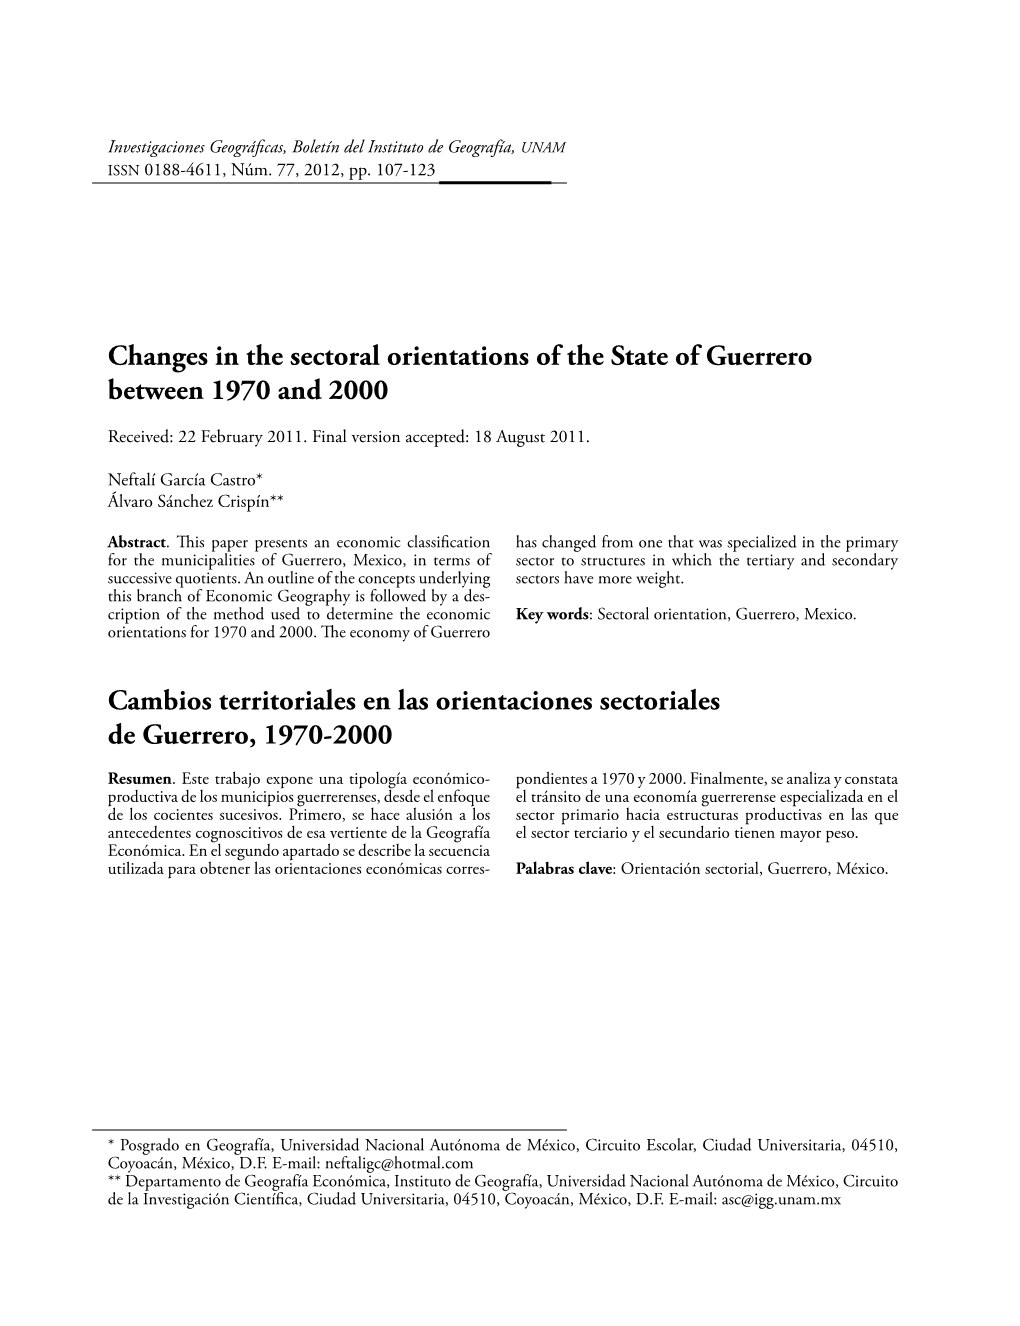 Changes in the Sectoral Orientations of the State of Guerrero Between 1970 and 2000 Cambios Territoriales En Las Orientaciones S